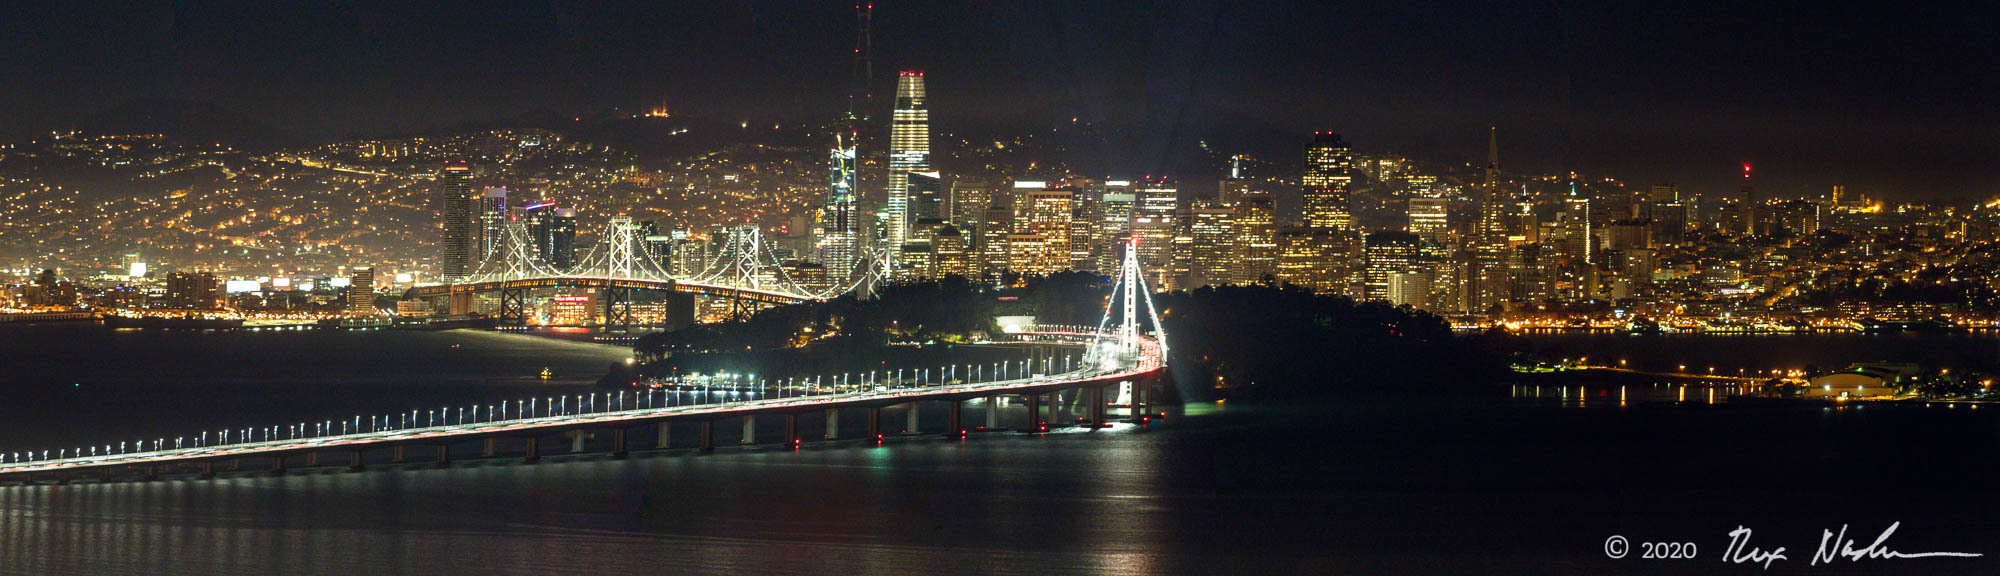 City with Bay - San Francisco